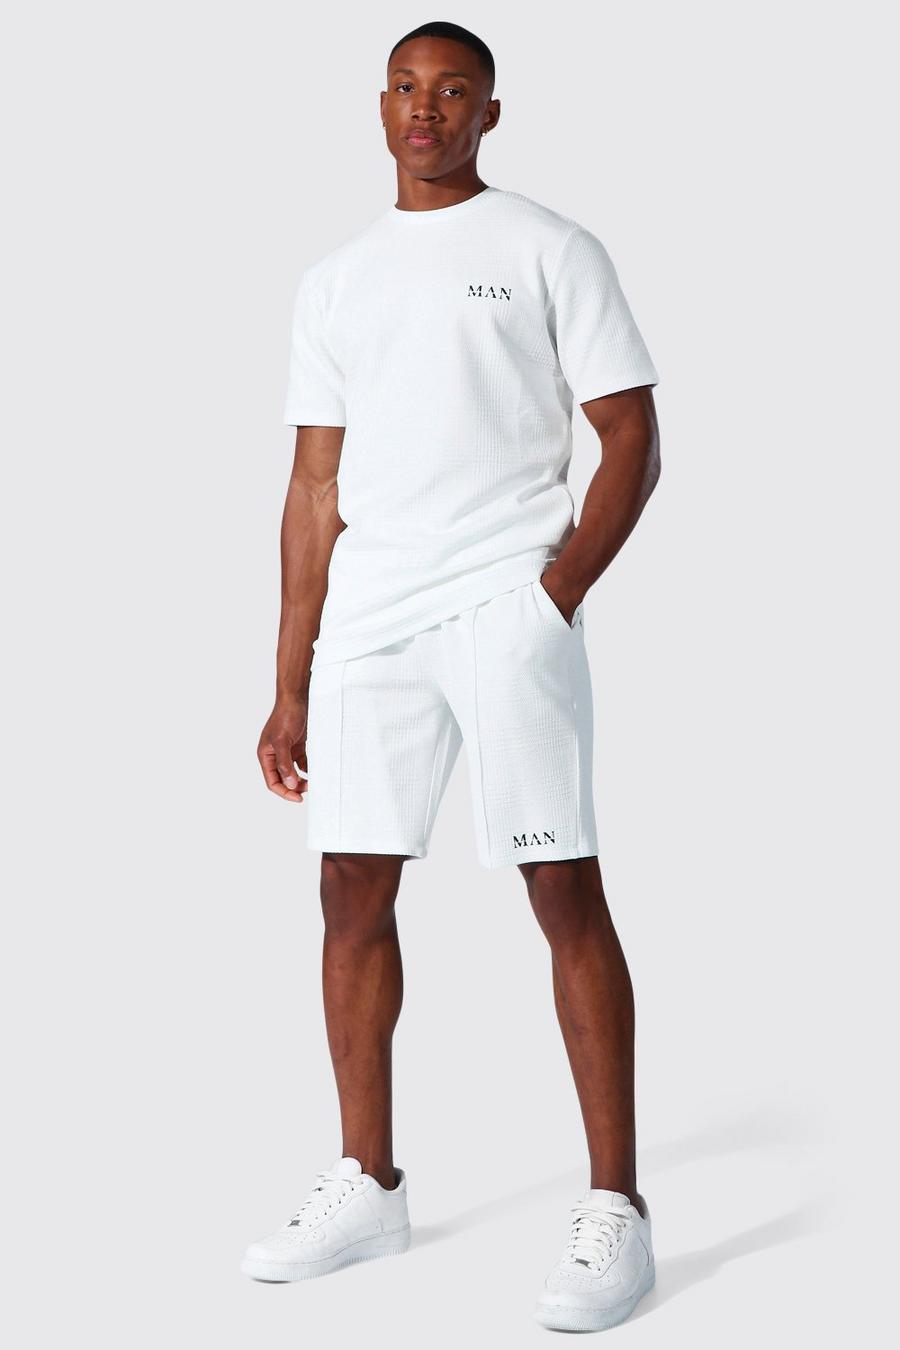 T-shirt jacquard et short - MAN, White image number 1